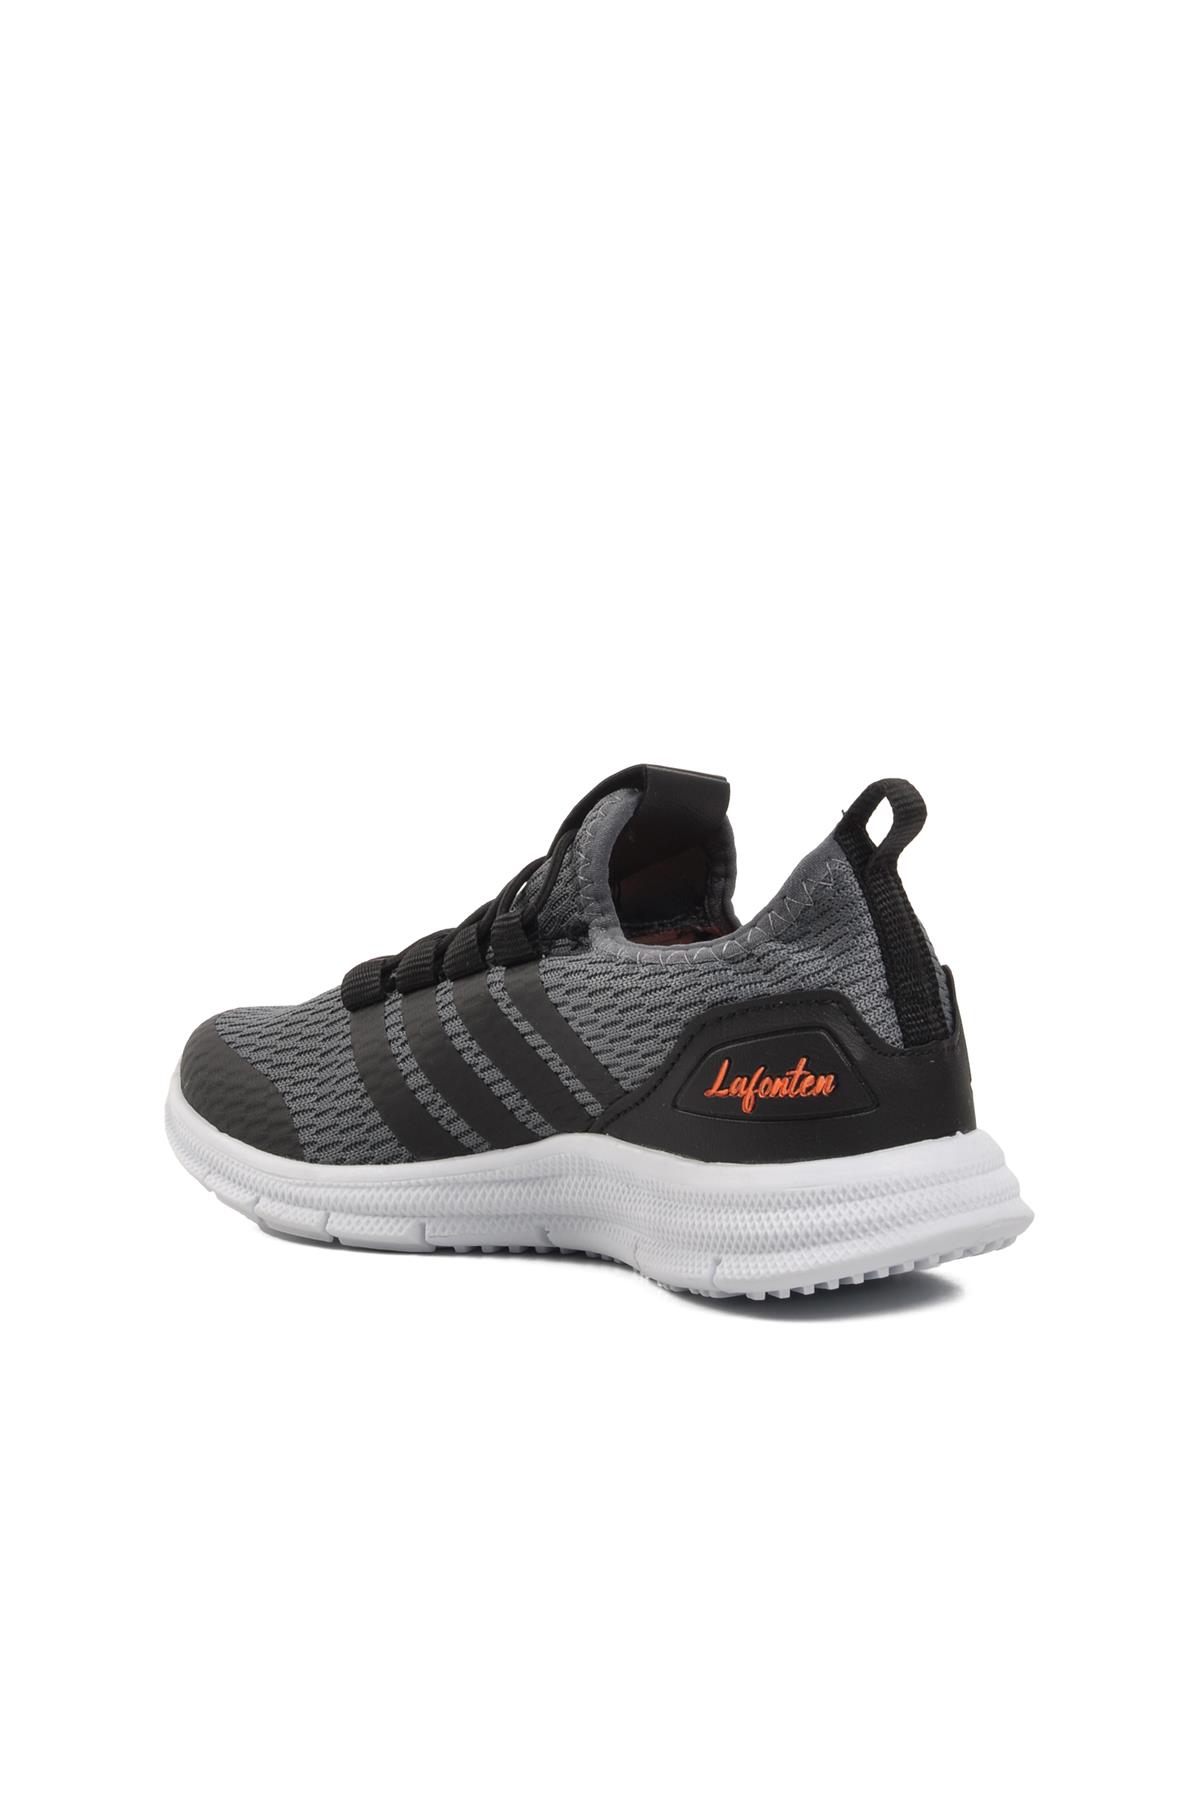 Ayakmod 706Y-F Füme-Siyah Bağcıksız Çocuk Spor Ayakkabı Ayakmod Çocuk Spor Ayakkabı